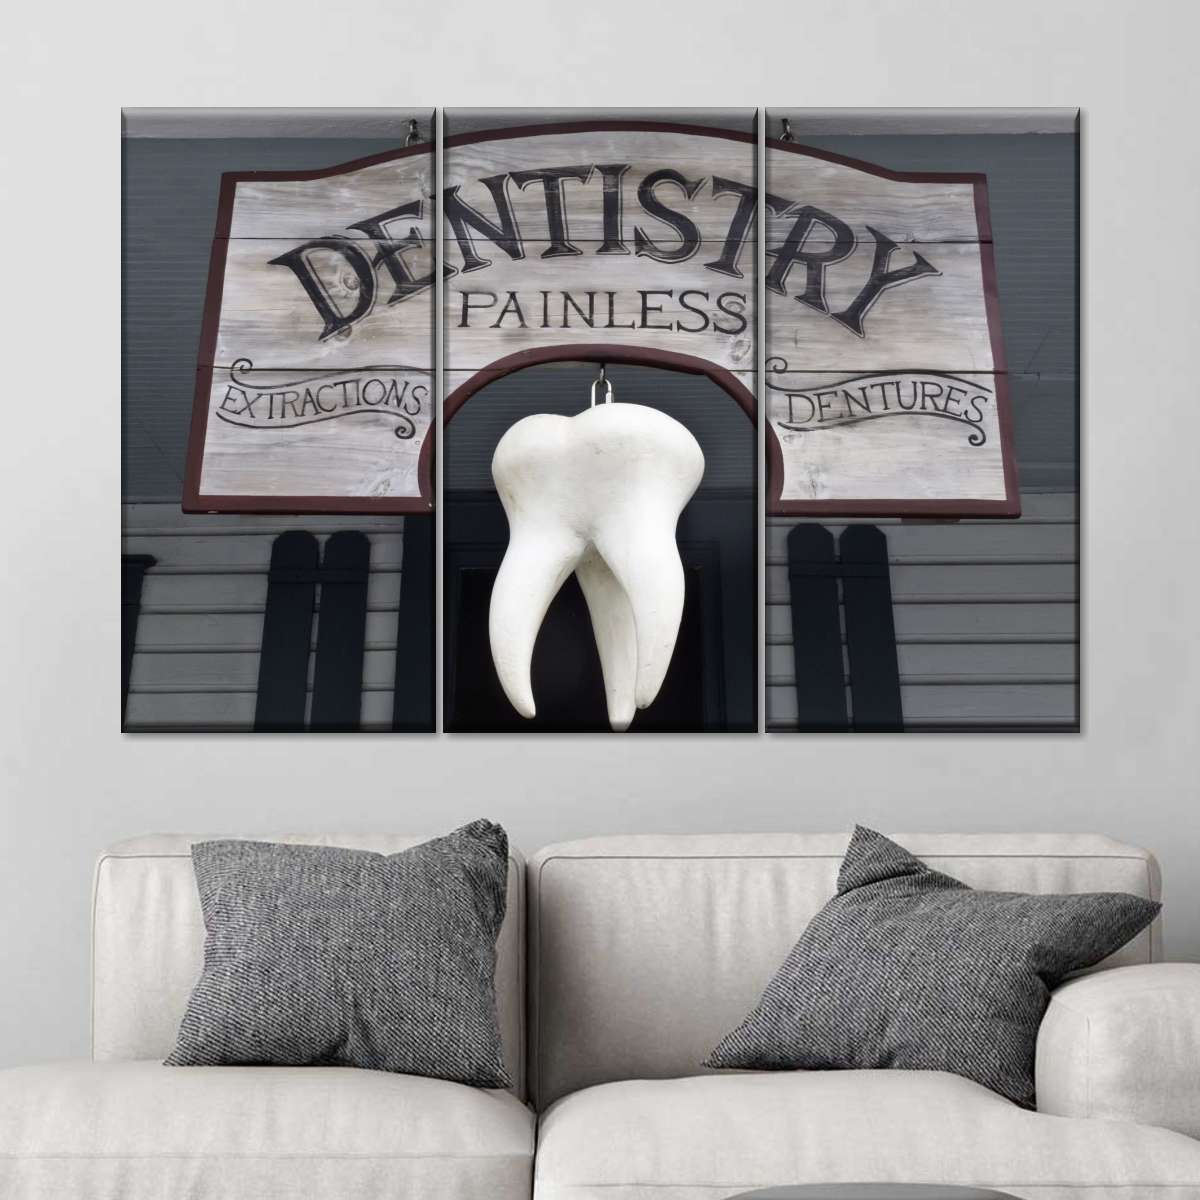 Vintage Dental Office Wall Art | Photography